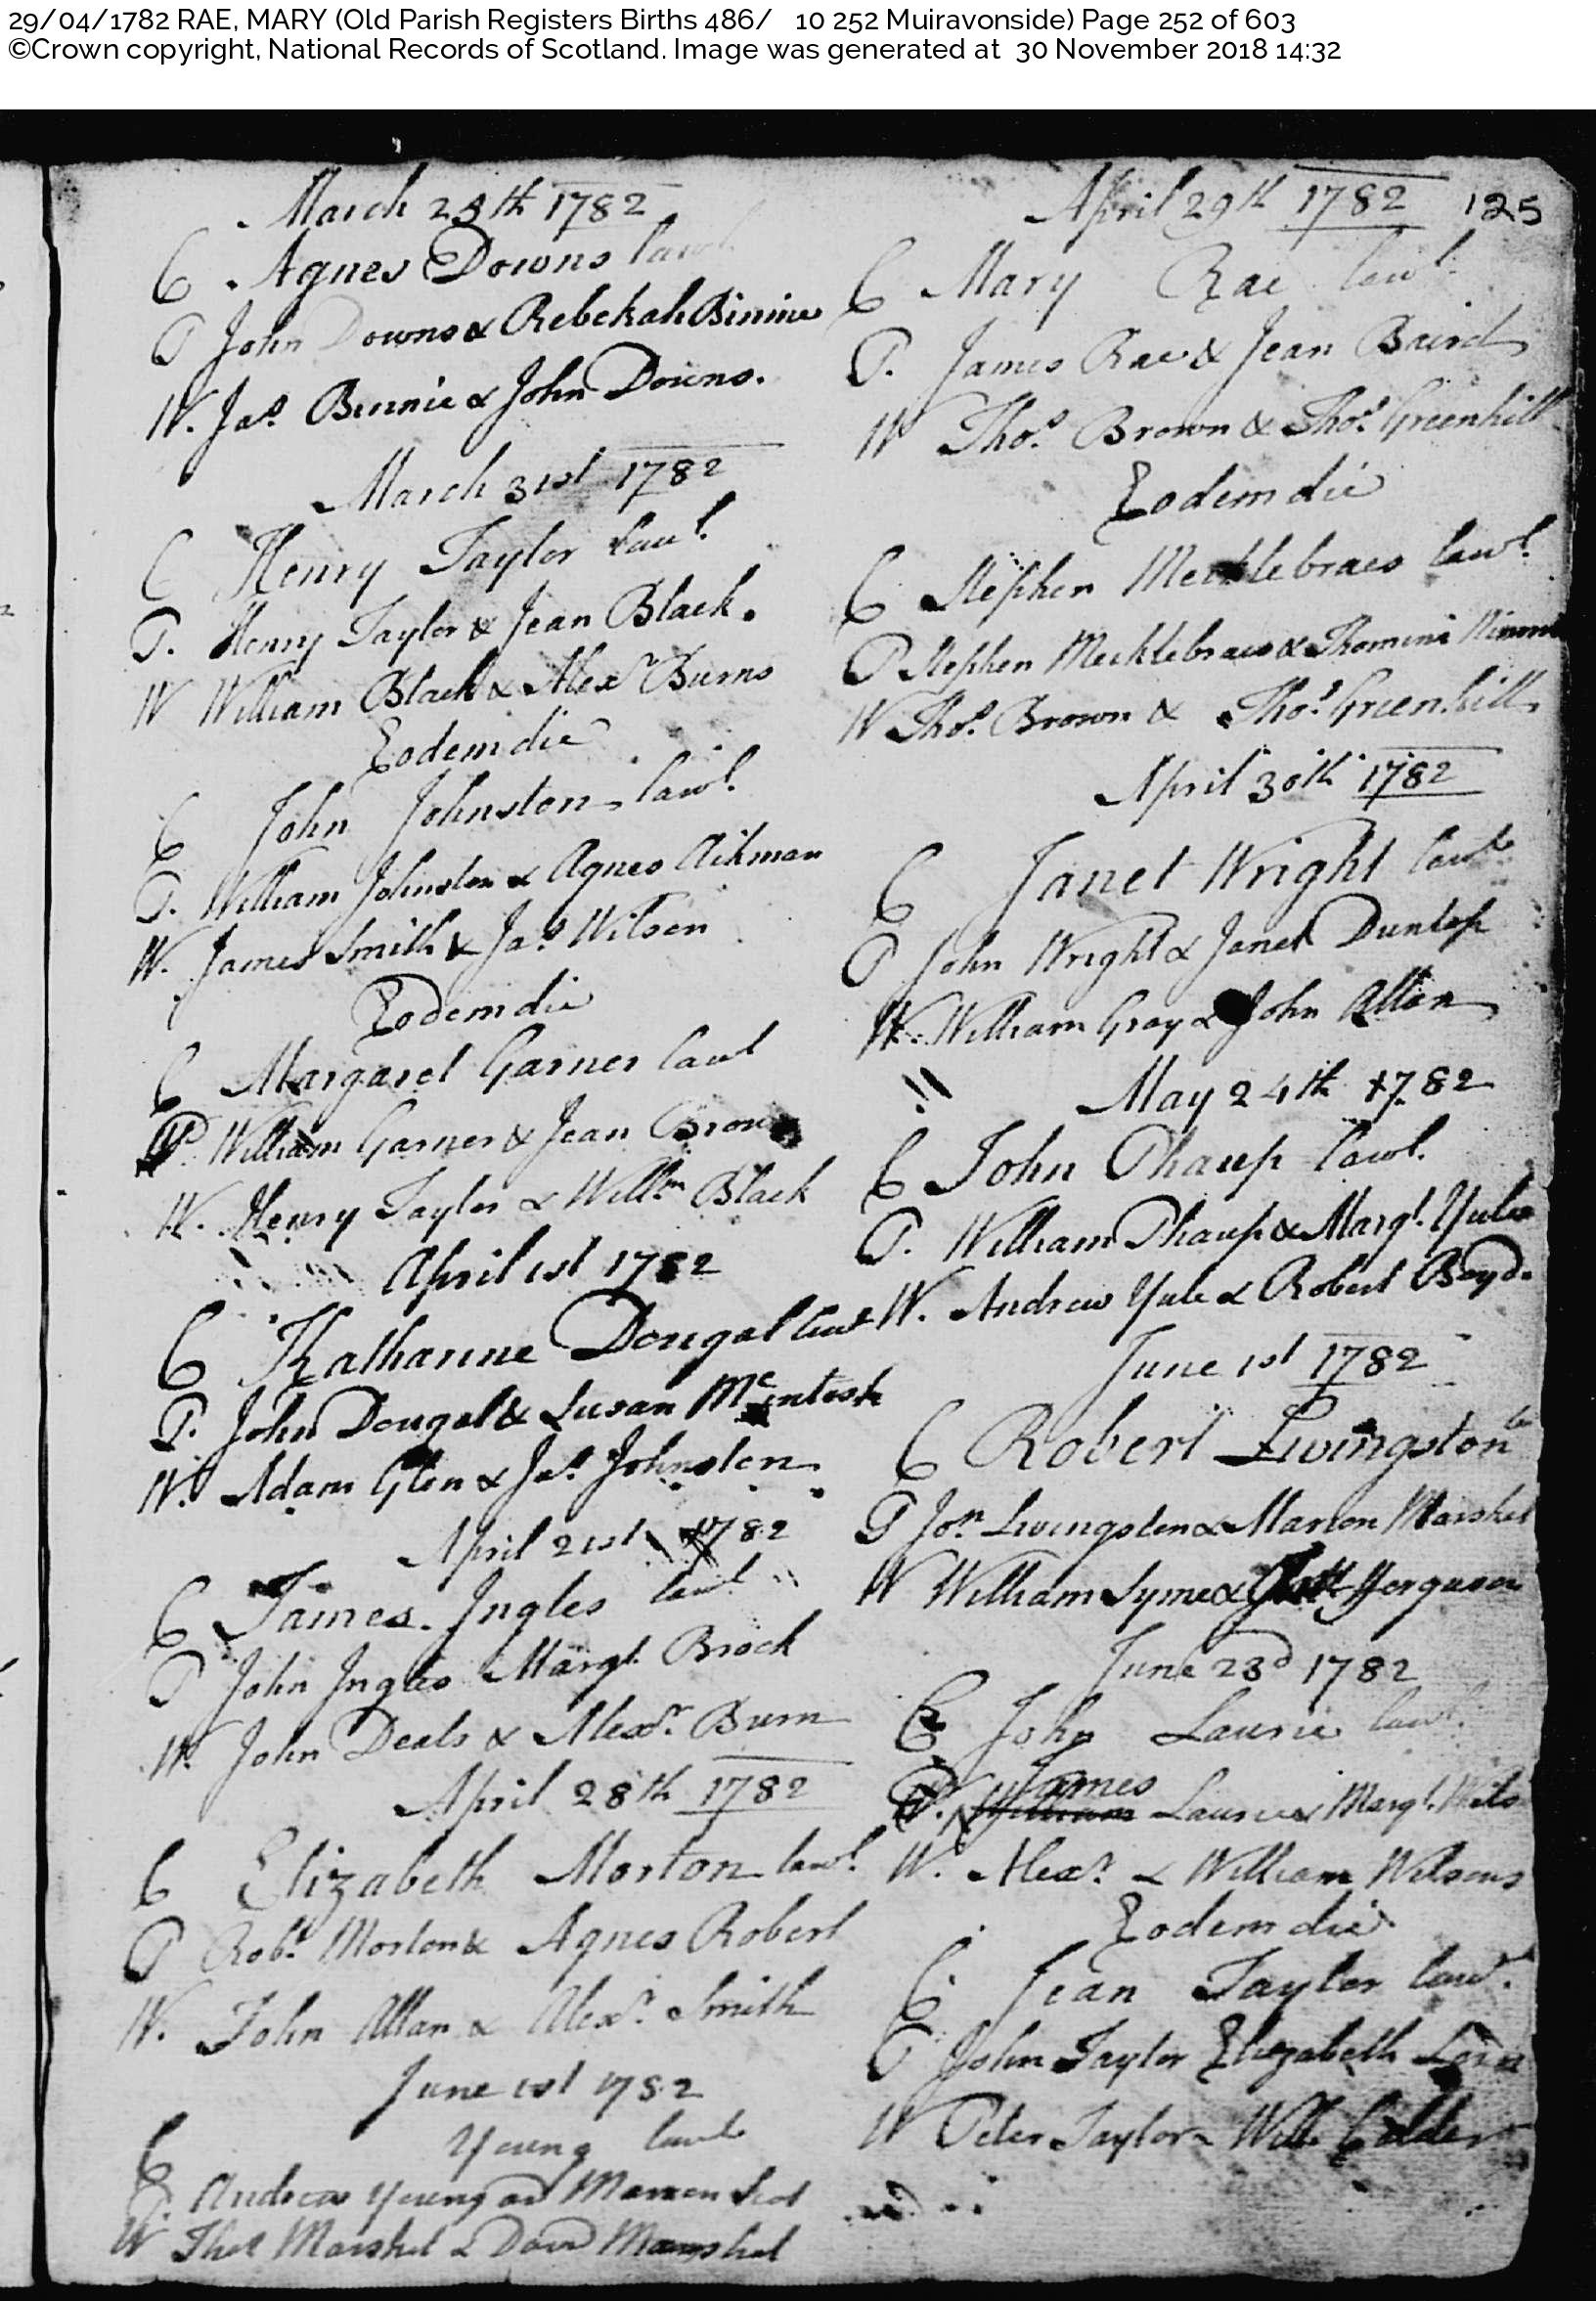 Mary Rae_B1782 Muiravonside, April 29, 1782